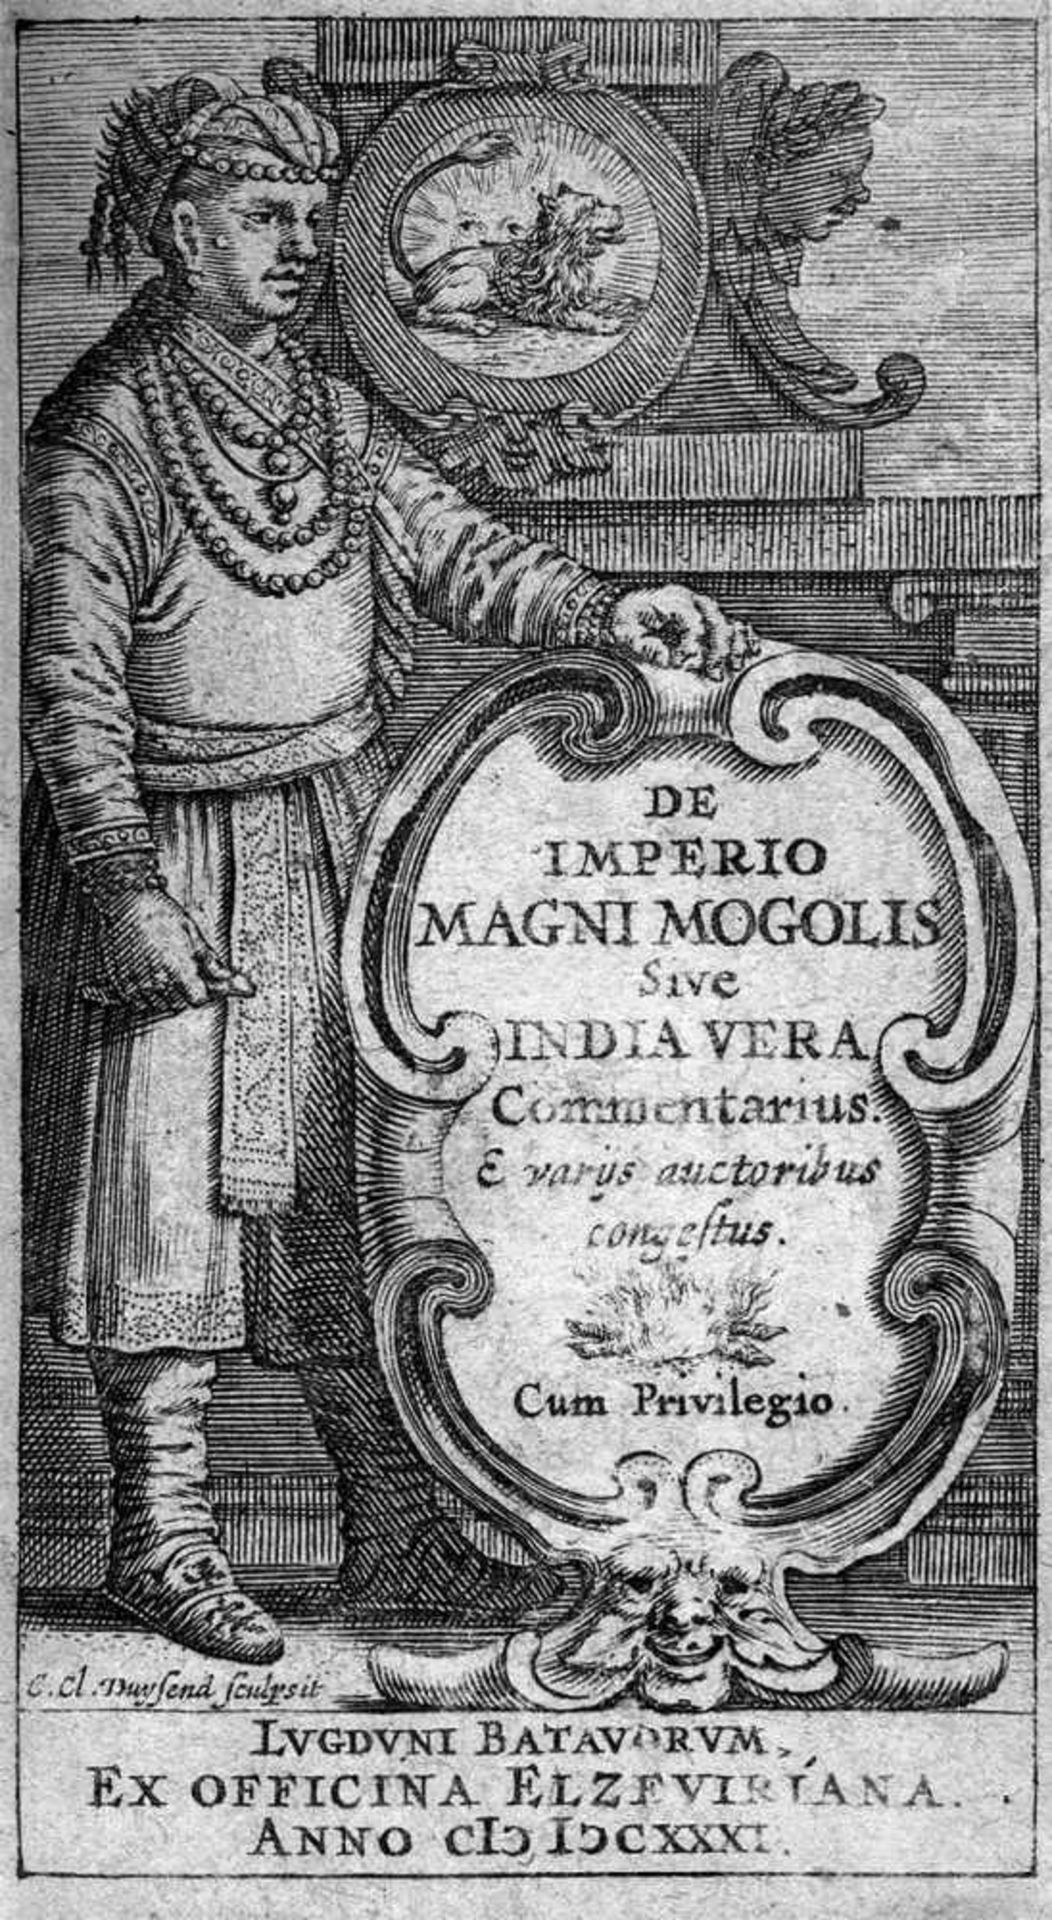 Laet, Johannes de: De imperio magni MogolisLaet, Johannes de. De imperio magni Mogolis sive India